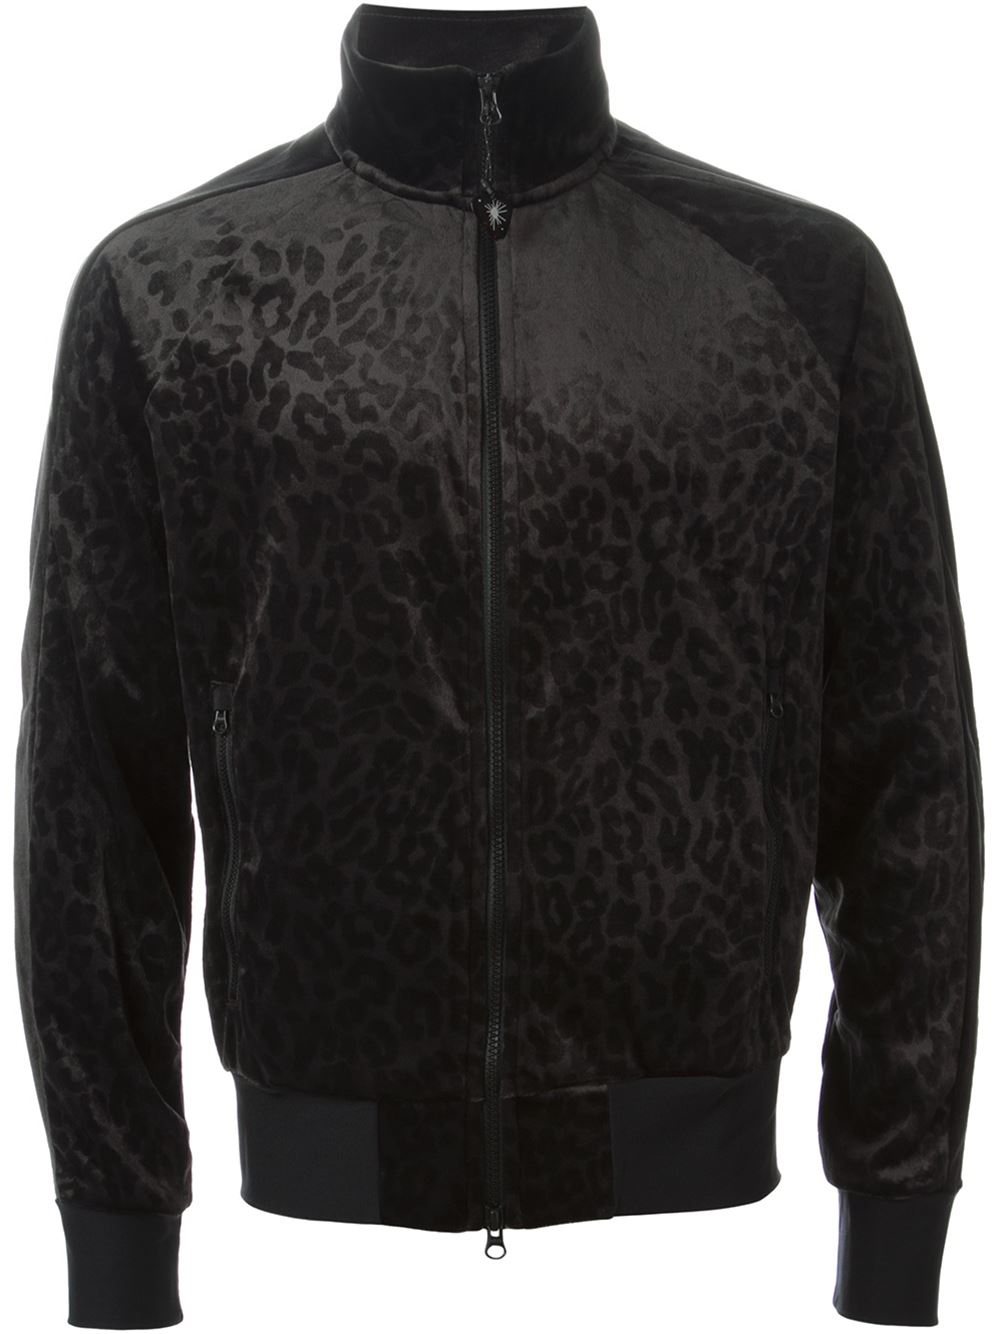 PUMA Miharayasuhiro Leopard Track Jacket in Black for Men - Lyst